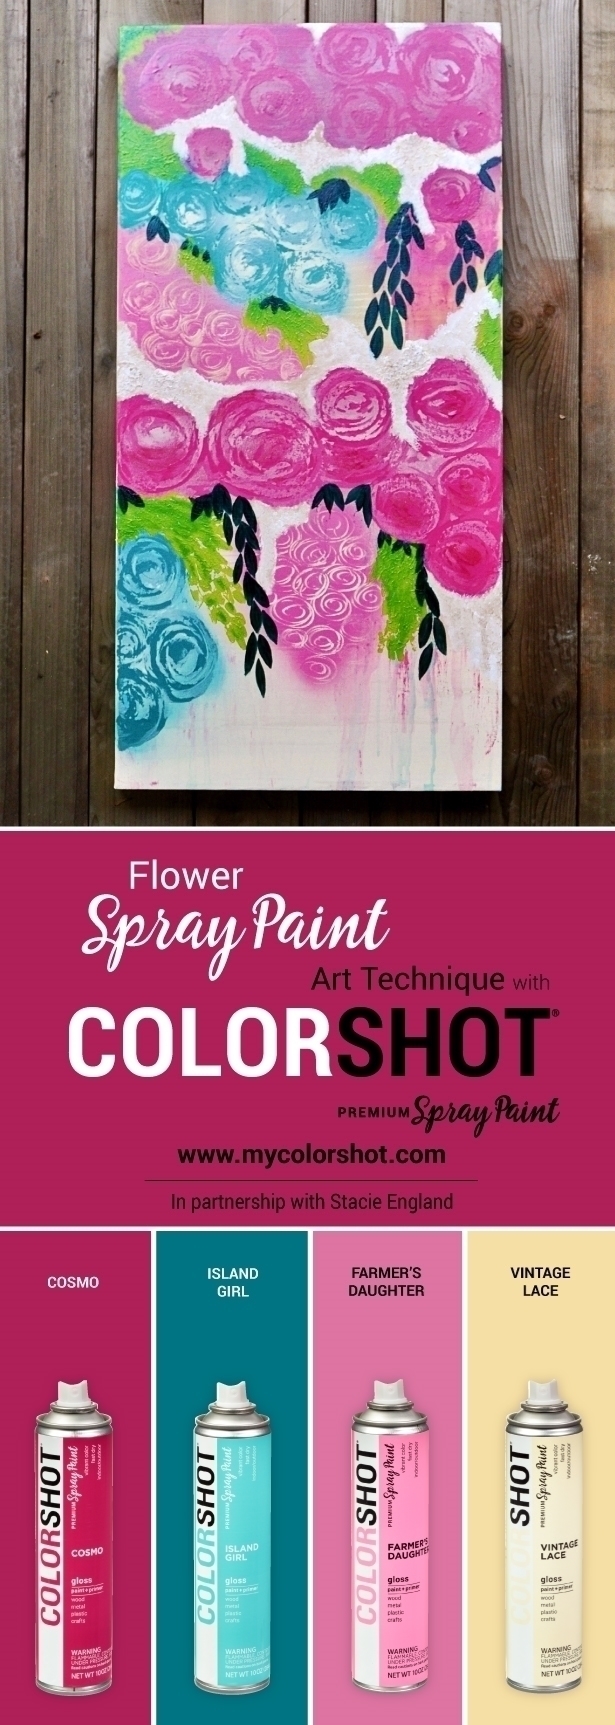 COLORSHOT Flower Spray Paint Art